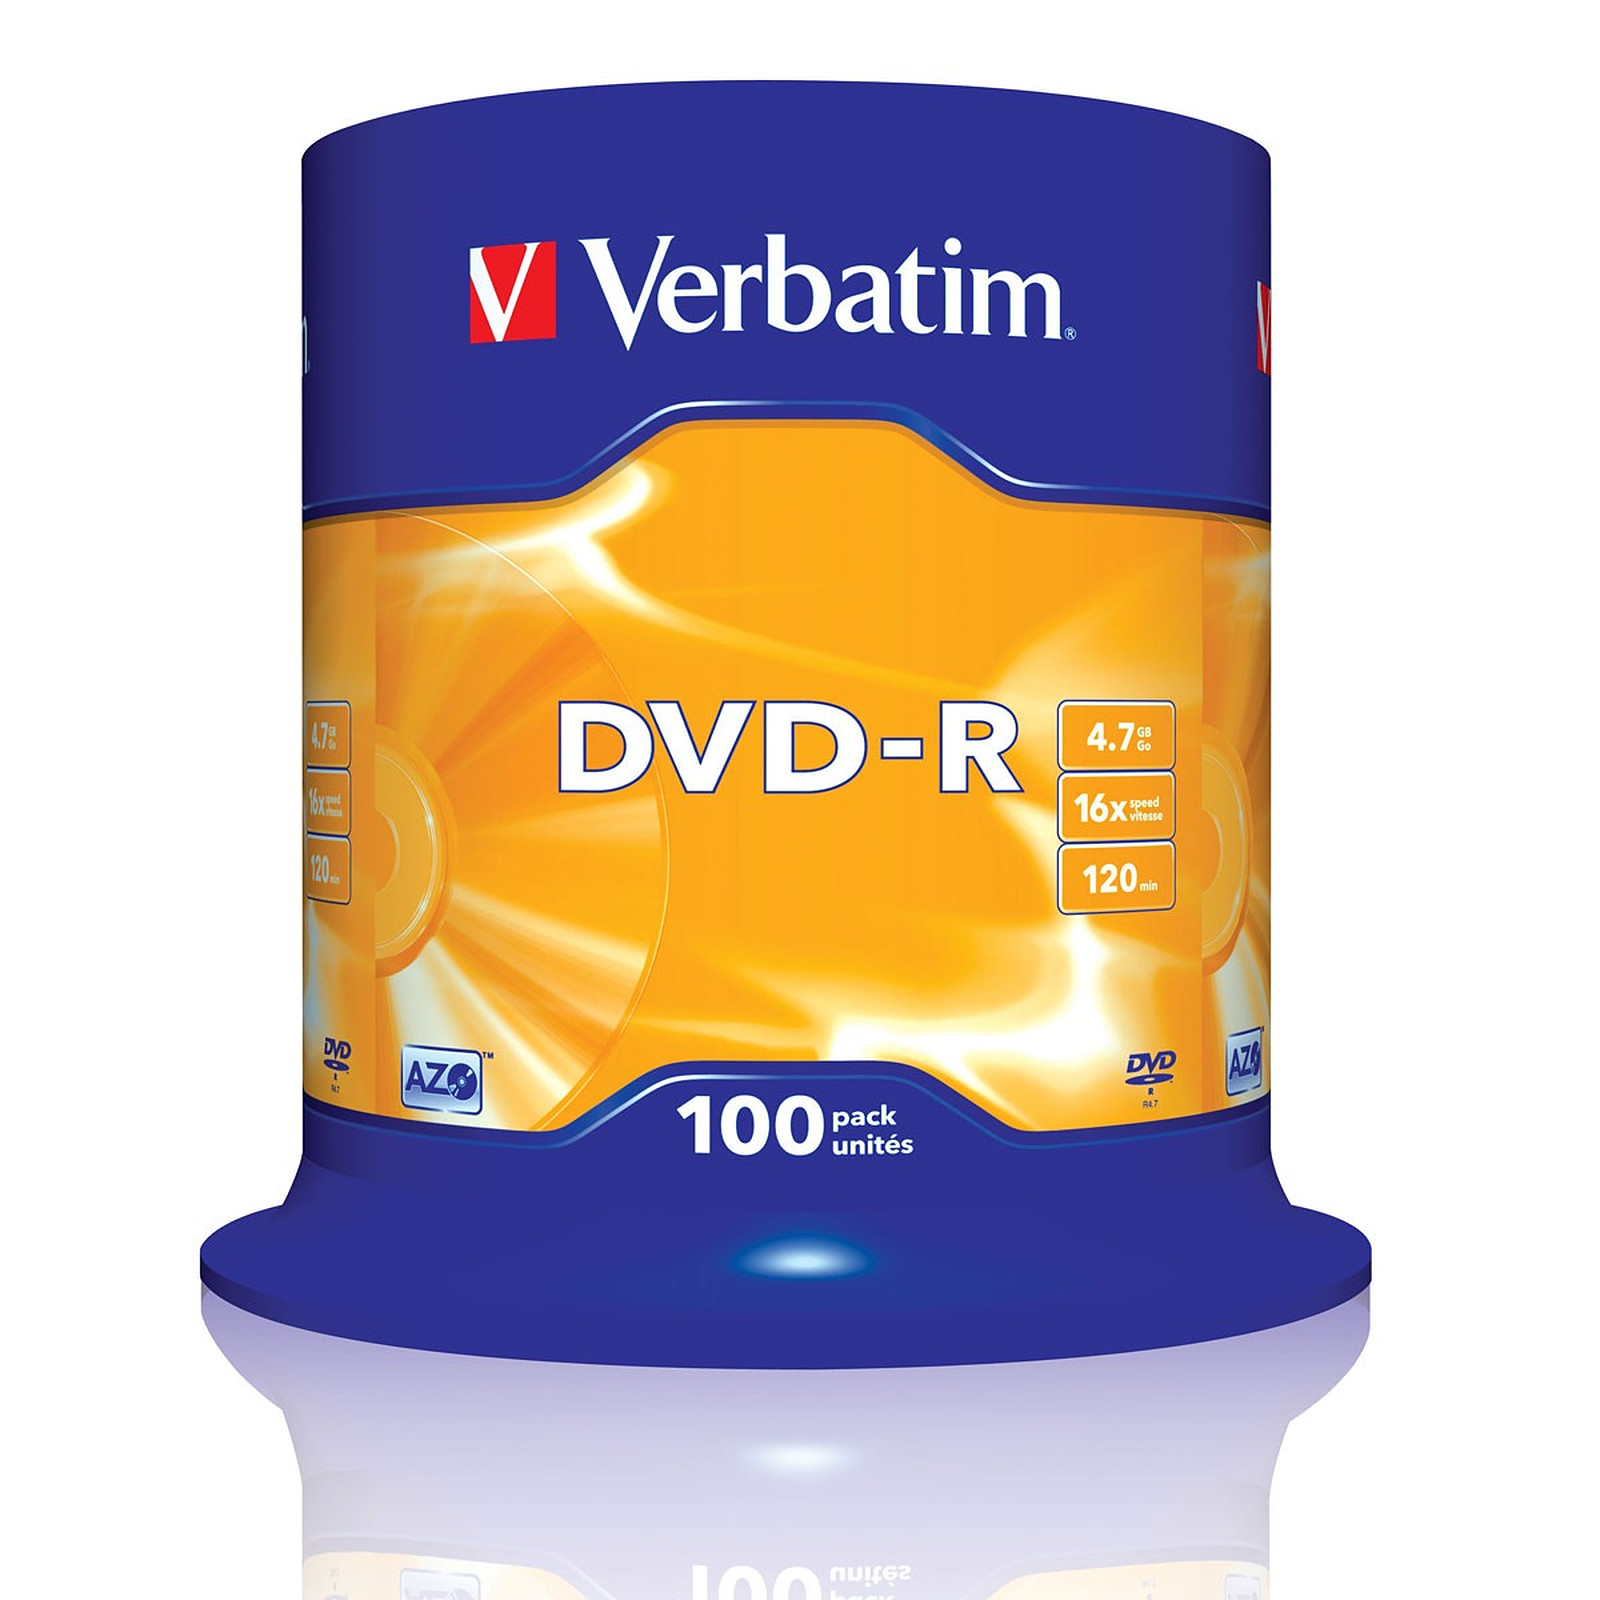 Verbatim DVD-R 4.7 Go certifie 16x (pack de 100, spindle) - DVD vierge Verbatim